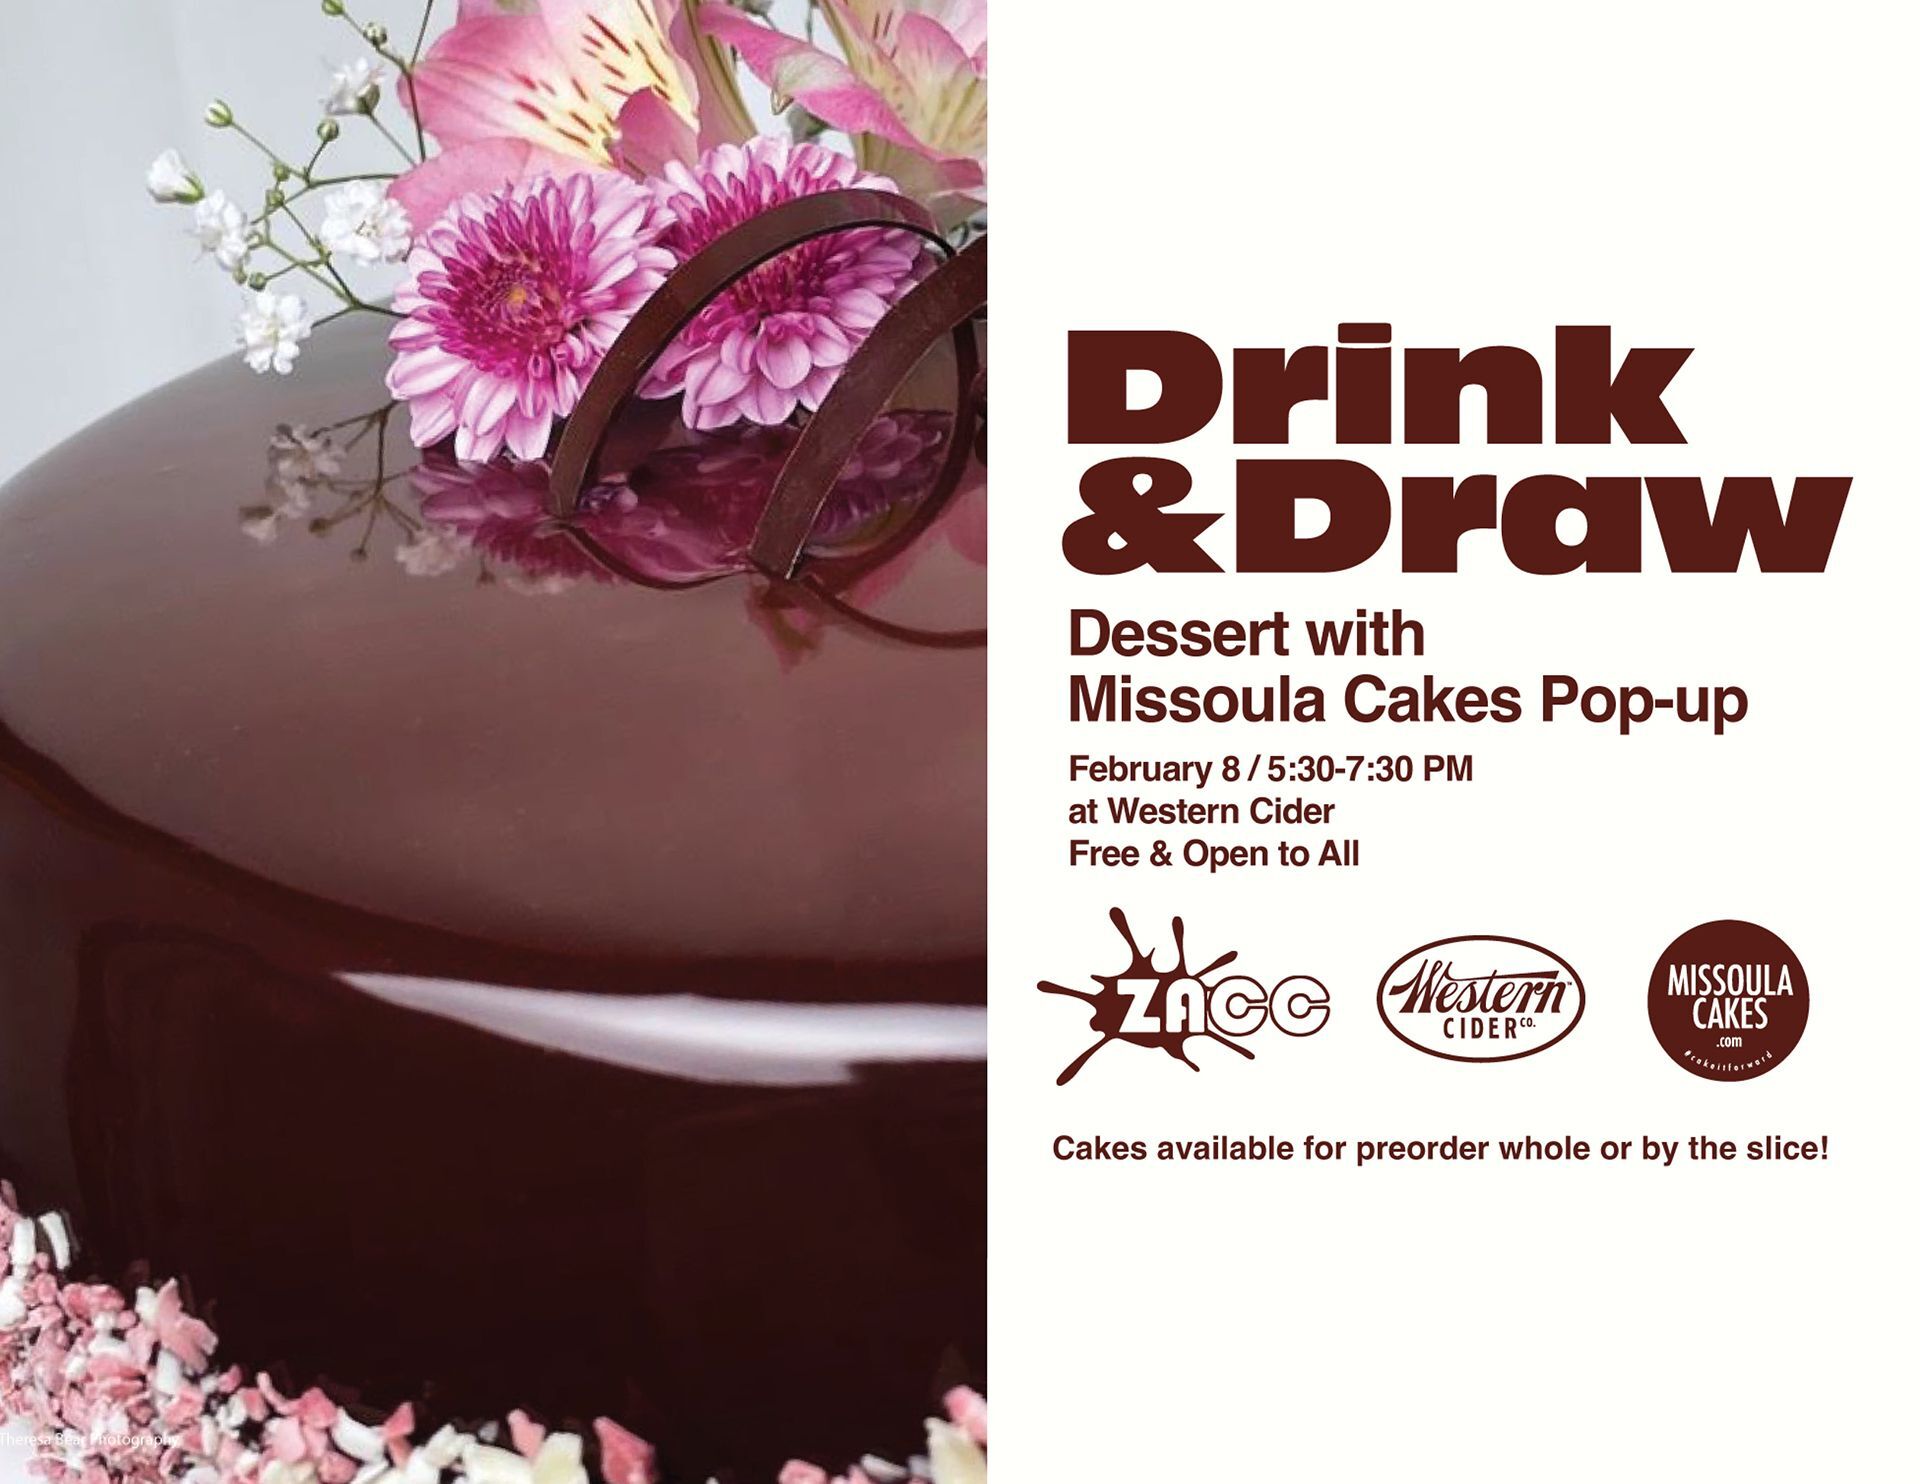 This month: Drink & Draw Dessert w/ Missoula Cakes